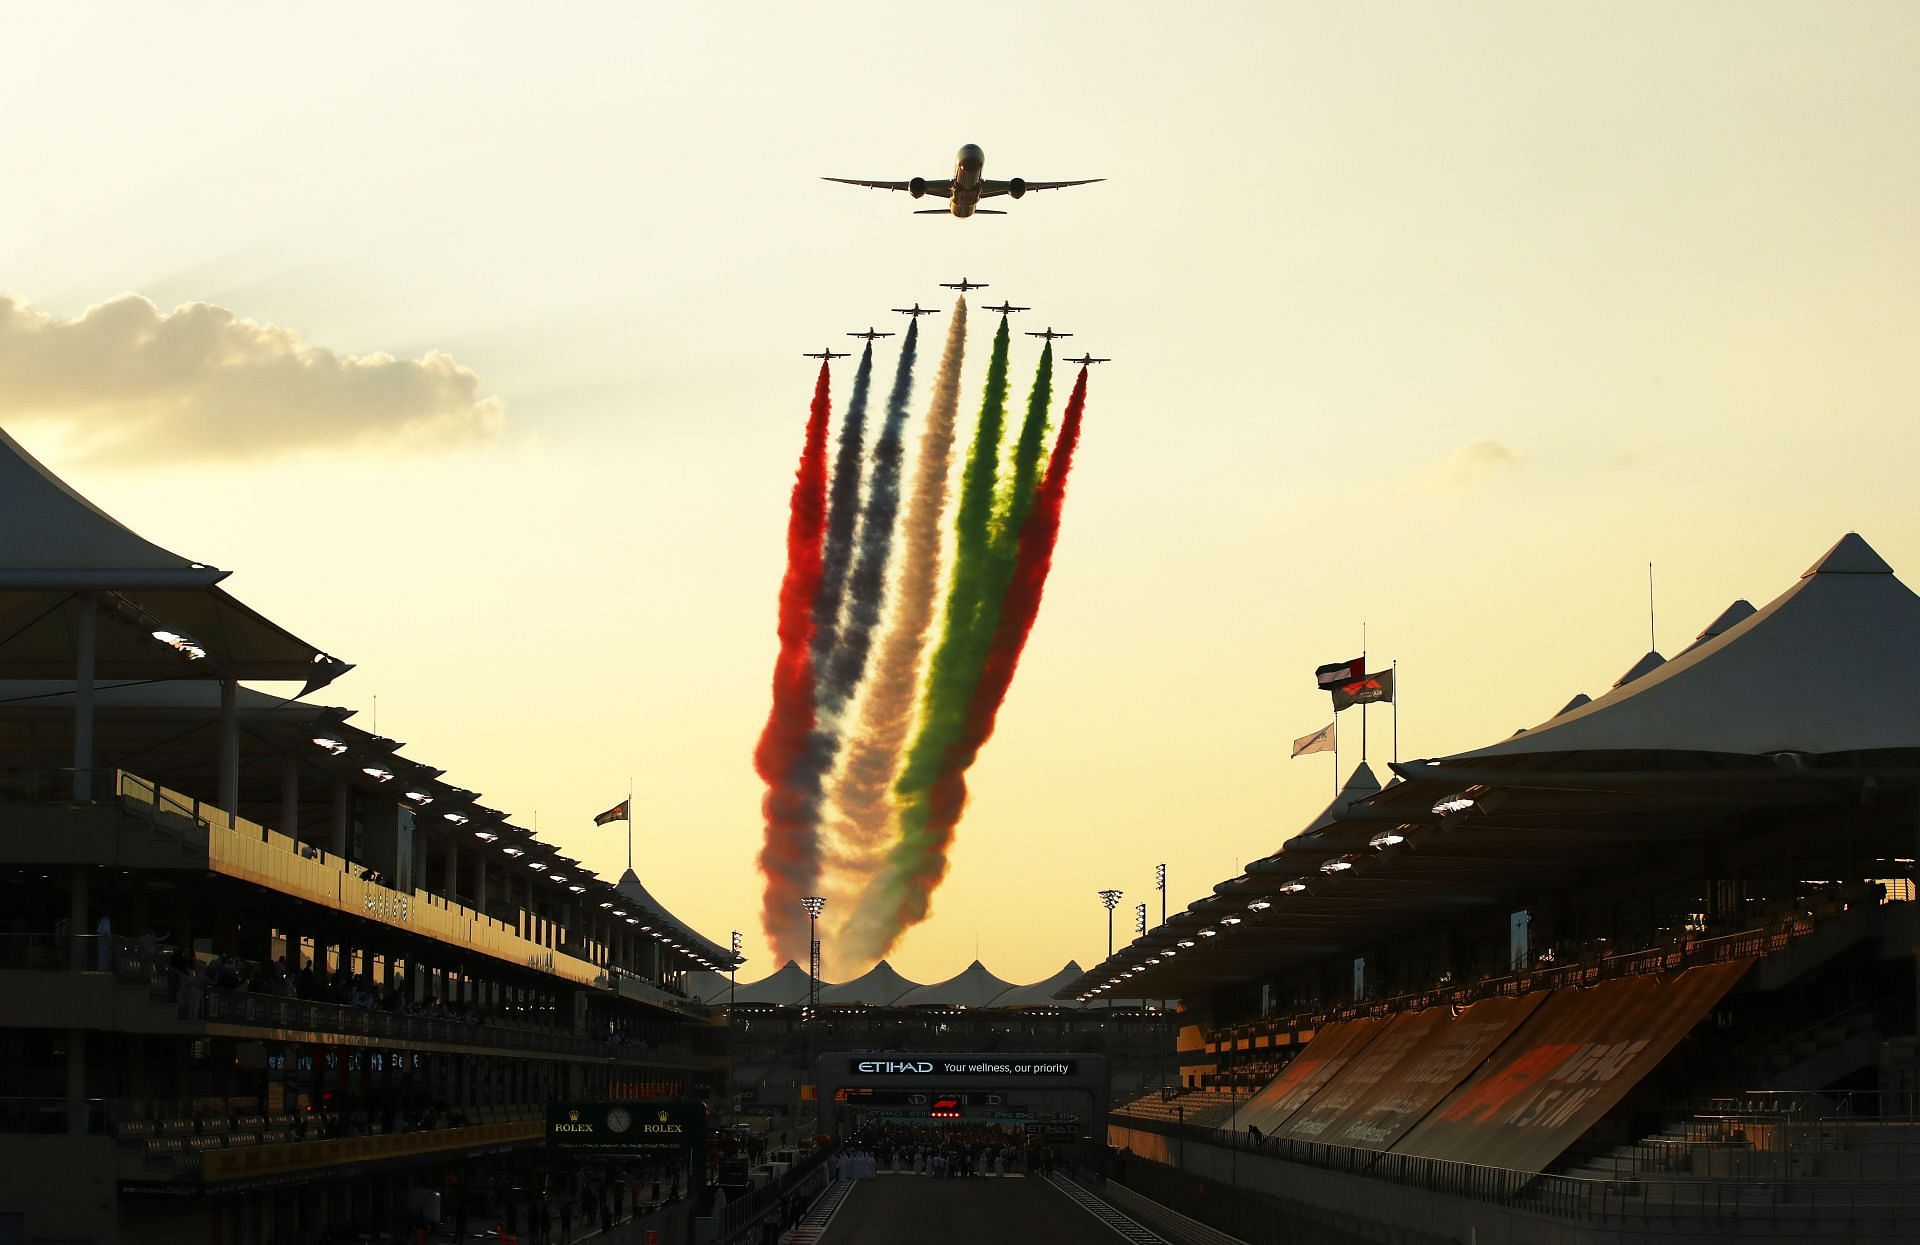 F1 Grand Prix of Abu Dhabi - Yas Marina Circuit